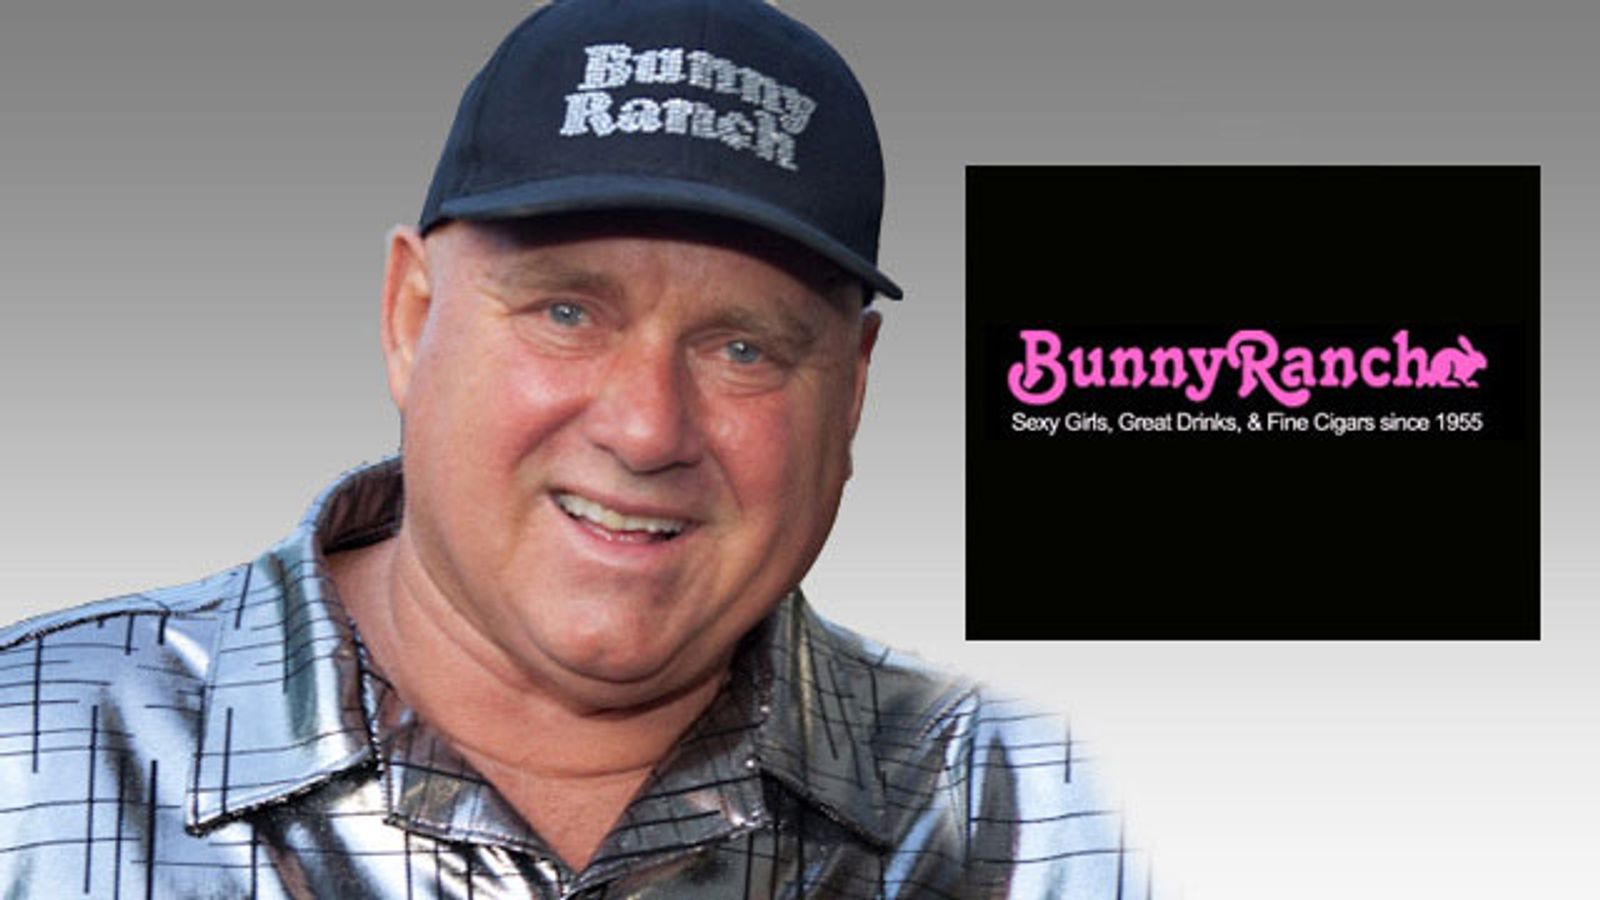 Bunny Ranch Offers Gov't Shutdown Tours, Discounts